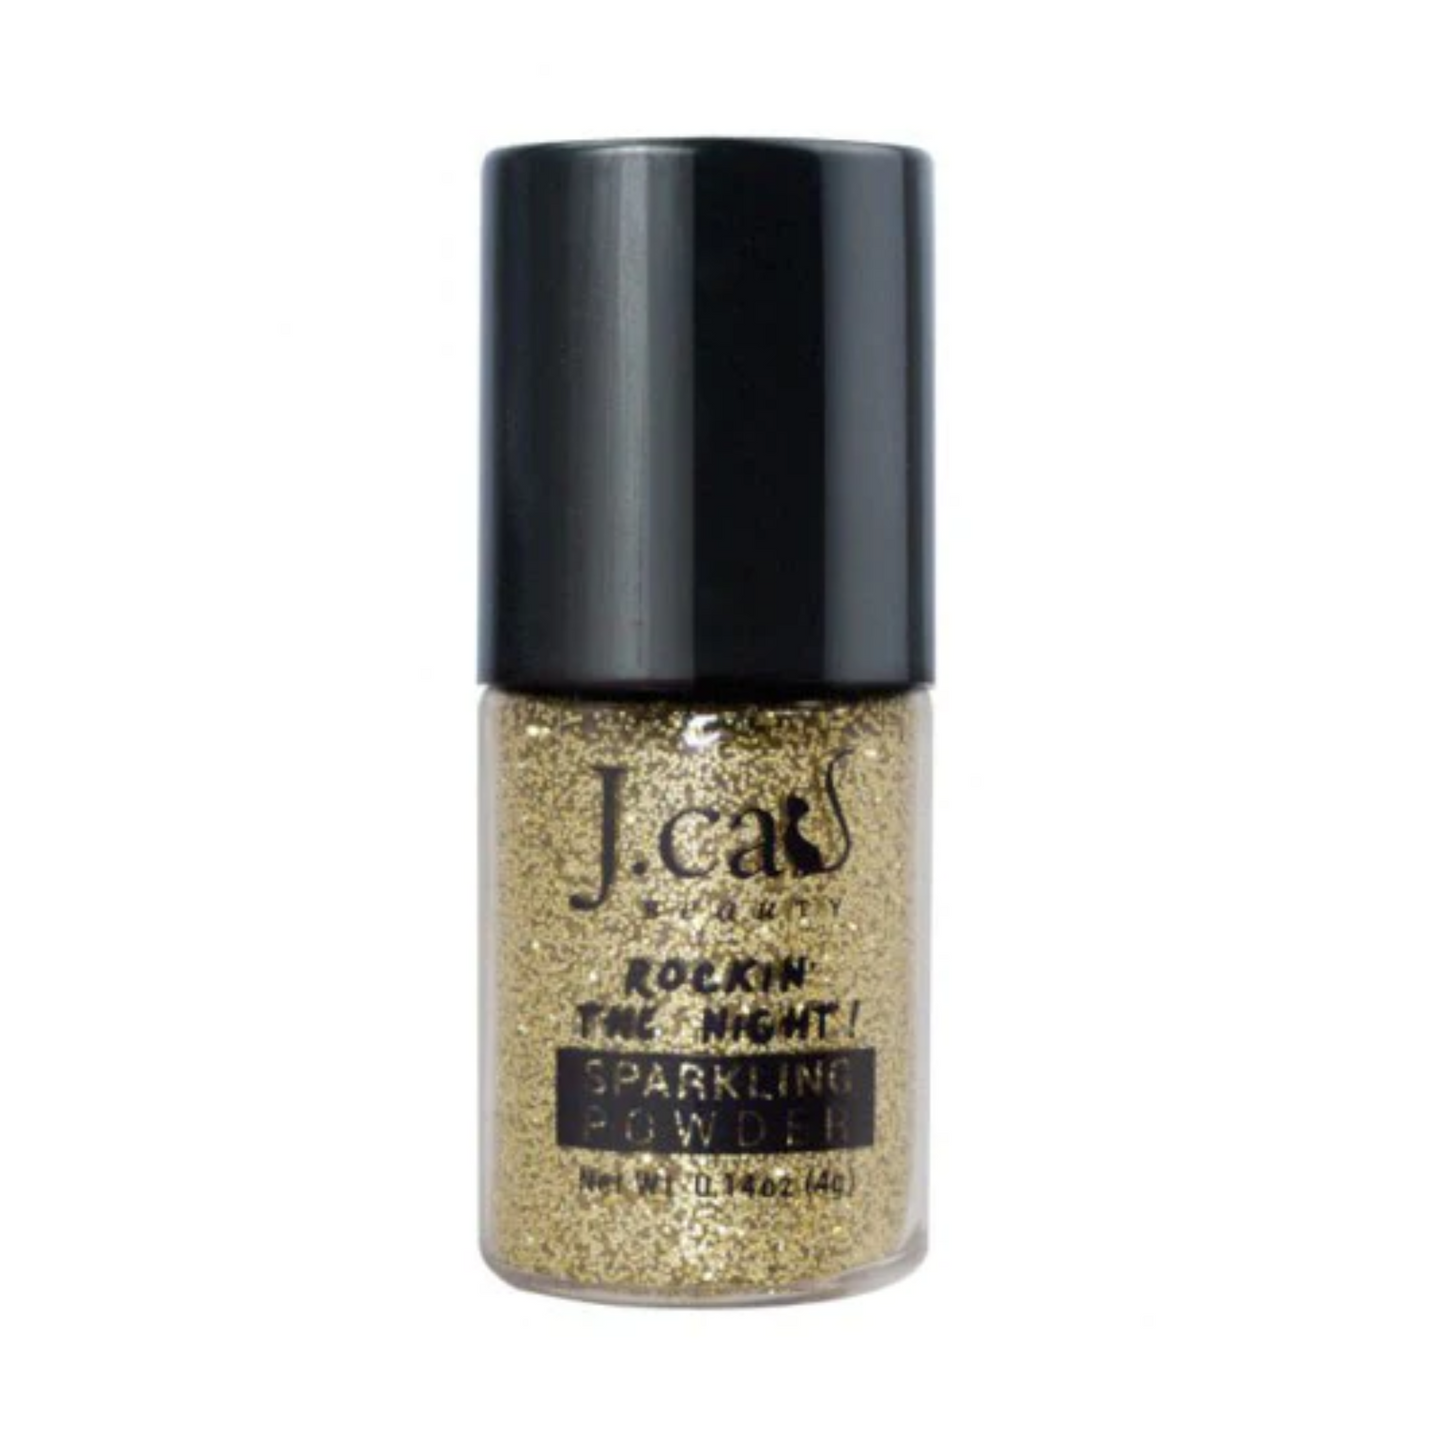 J. CAT BEAUTY Sparkling Powder - Amazing Gold